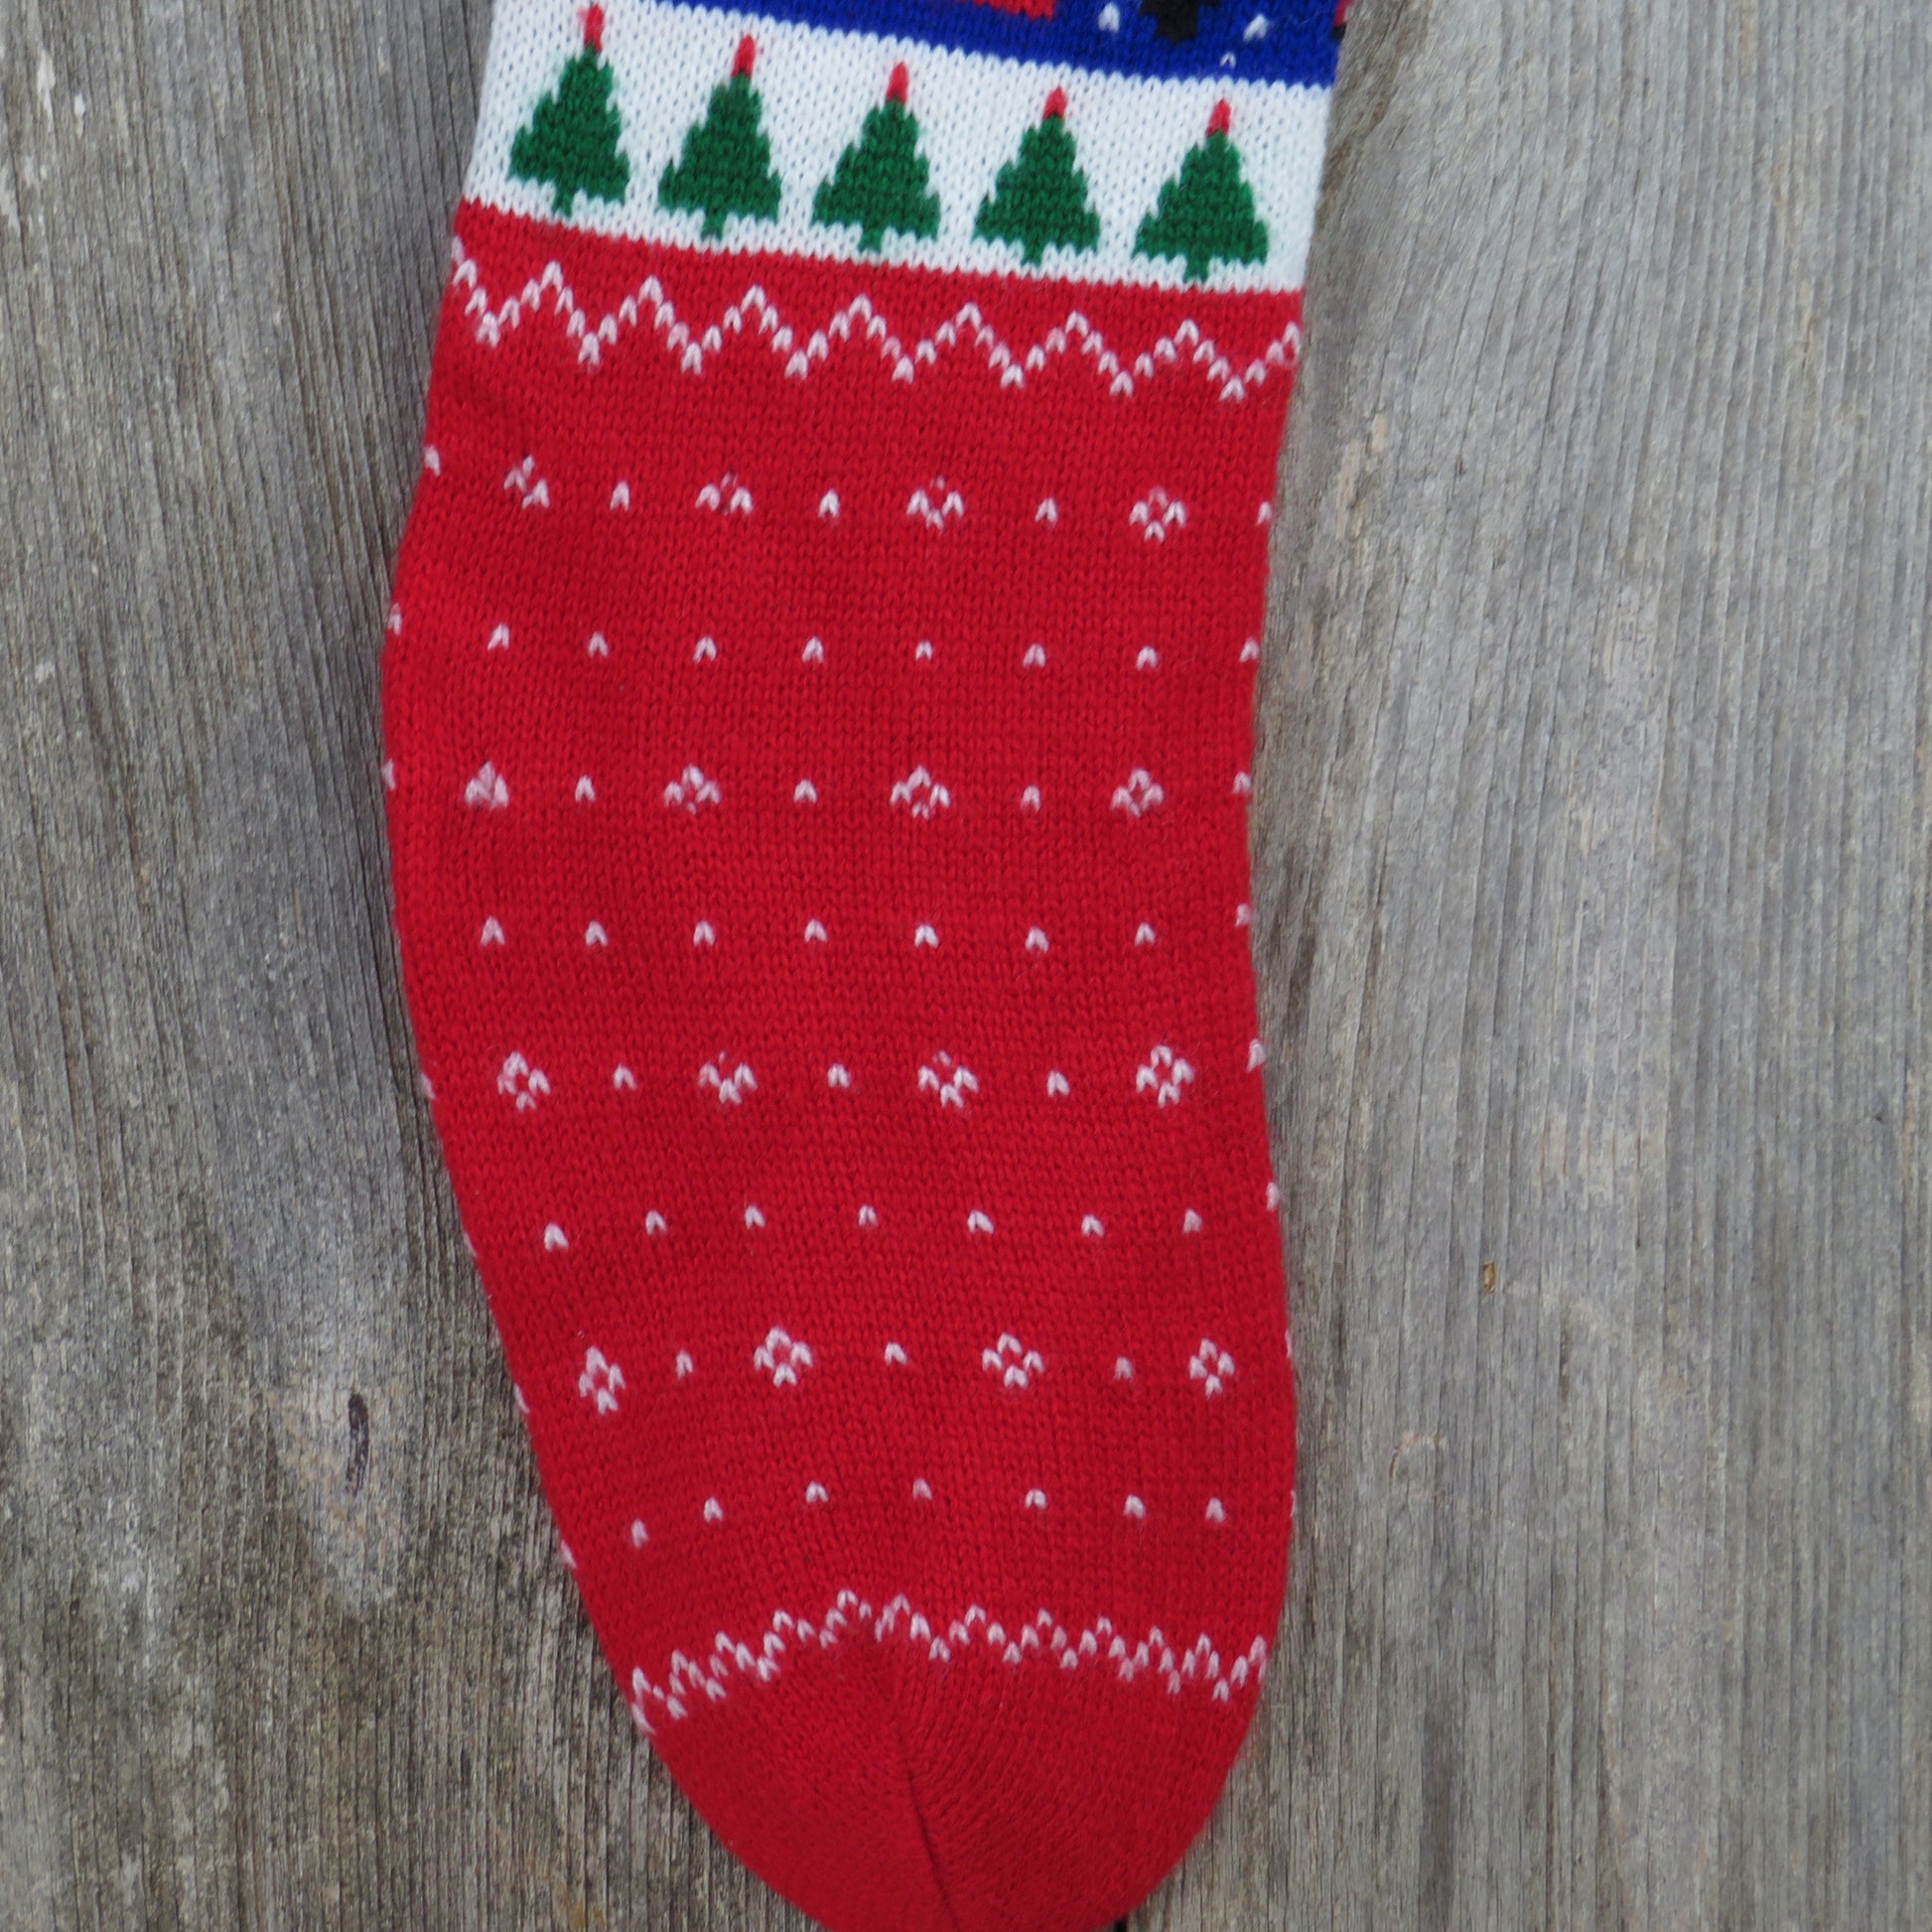 Vintage Cow Farm Knit Christmas Stocking Blue Red Green Santa Hat Tree ST103 - At Grandma's Table